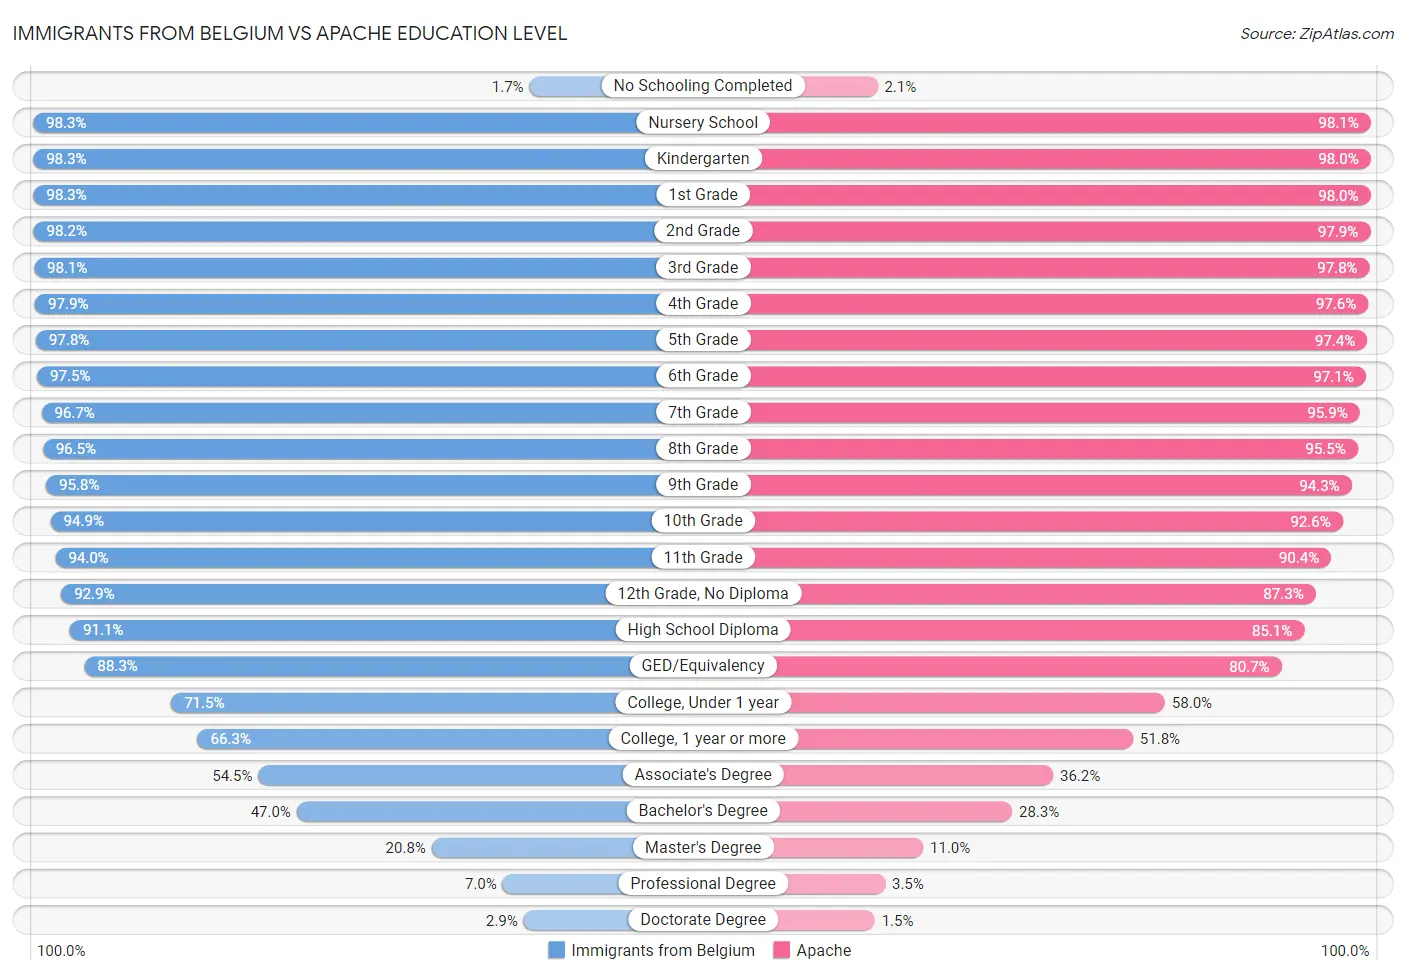 Immigrants from Belgium vs Apache Education Level